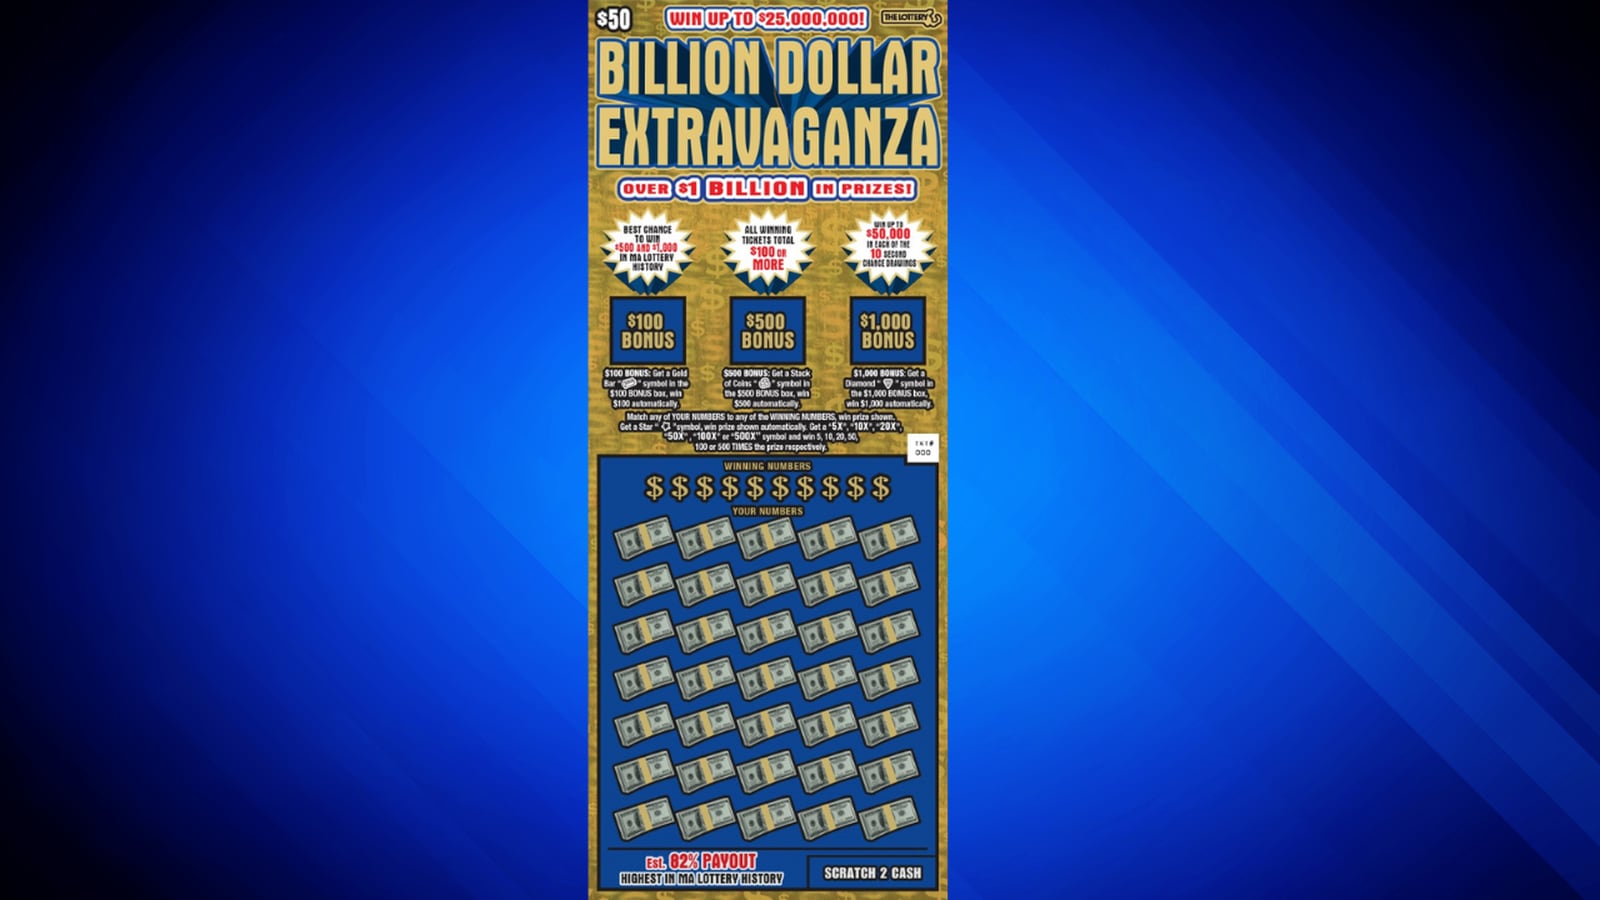 ‘Billion Dollar Extravaganza’ New 50 scratch ticket officially on